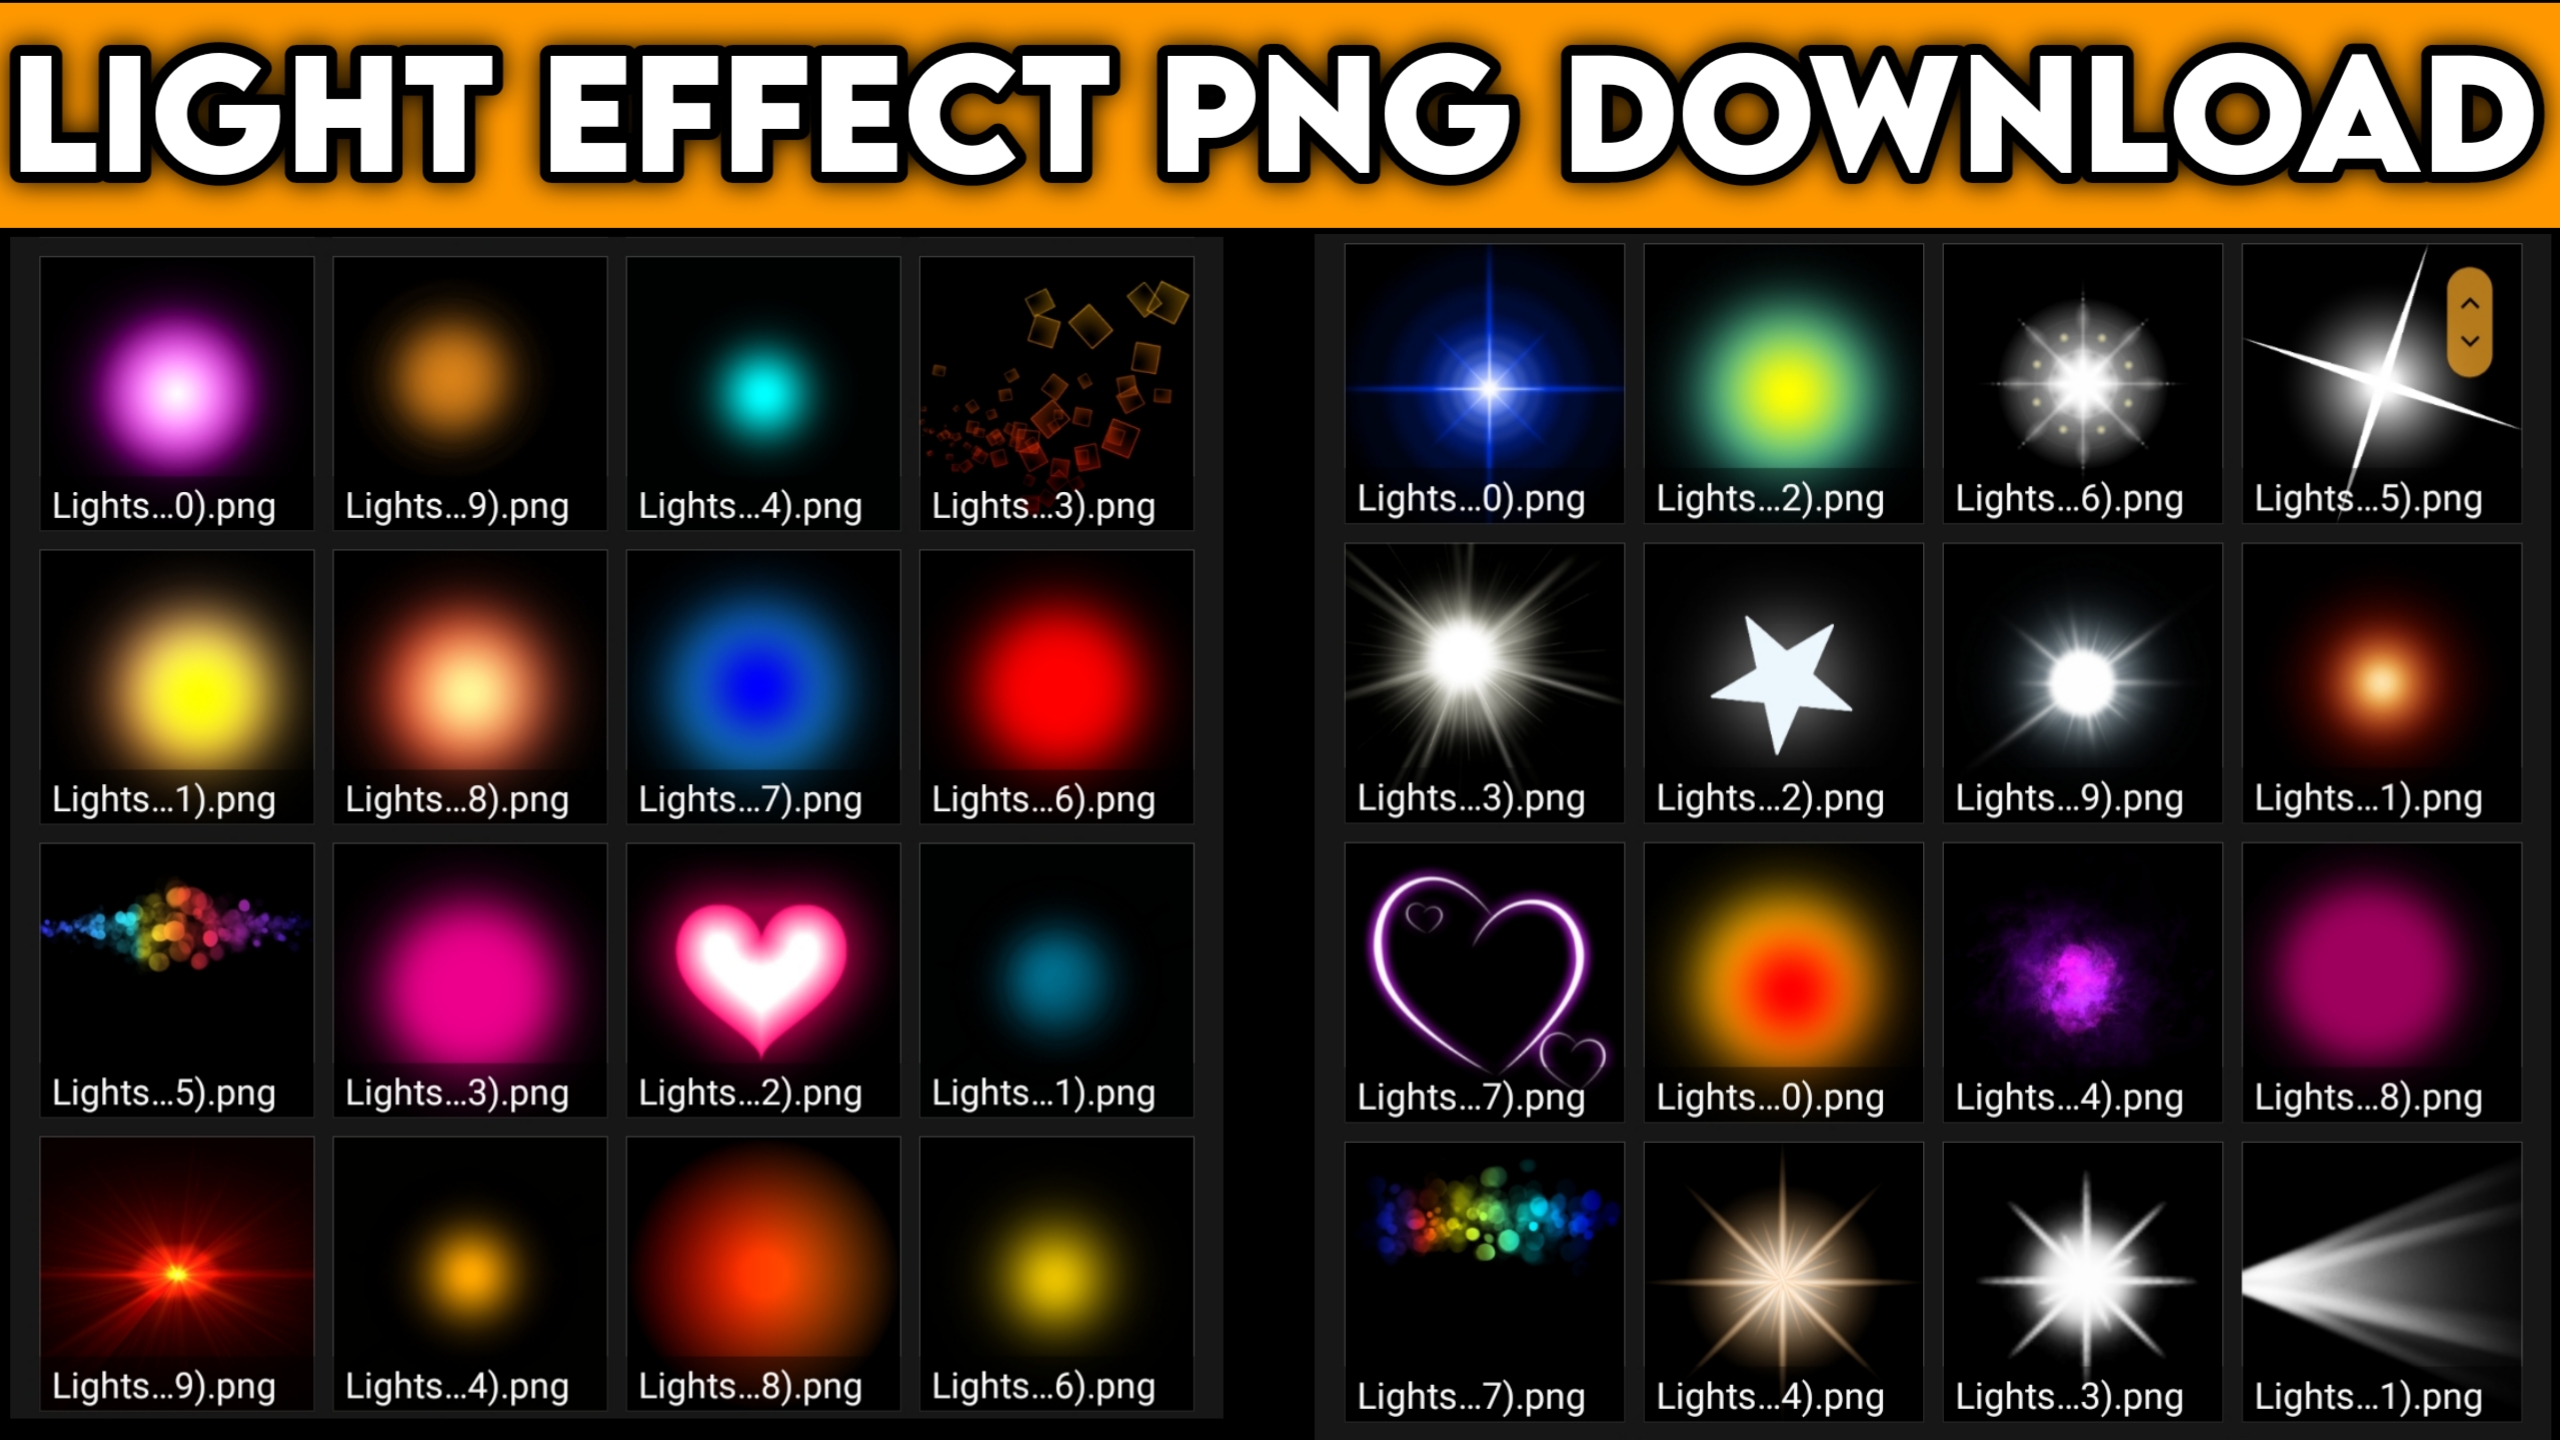 Light Effect Top 50 Png Download For Avee Player 2022 By DjDevrajKasya